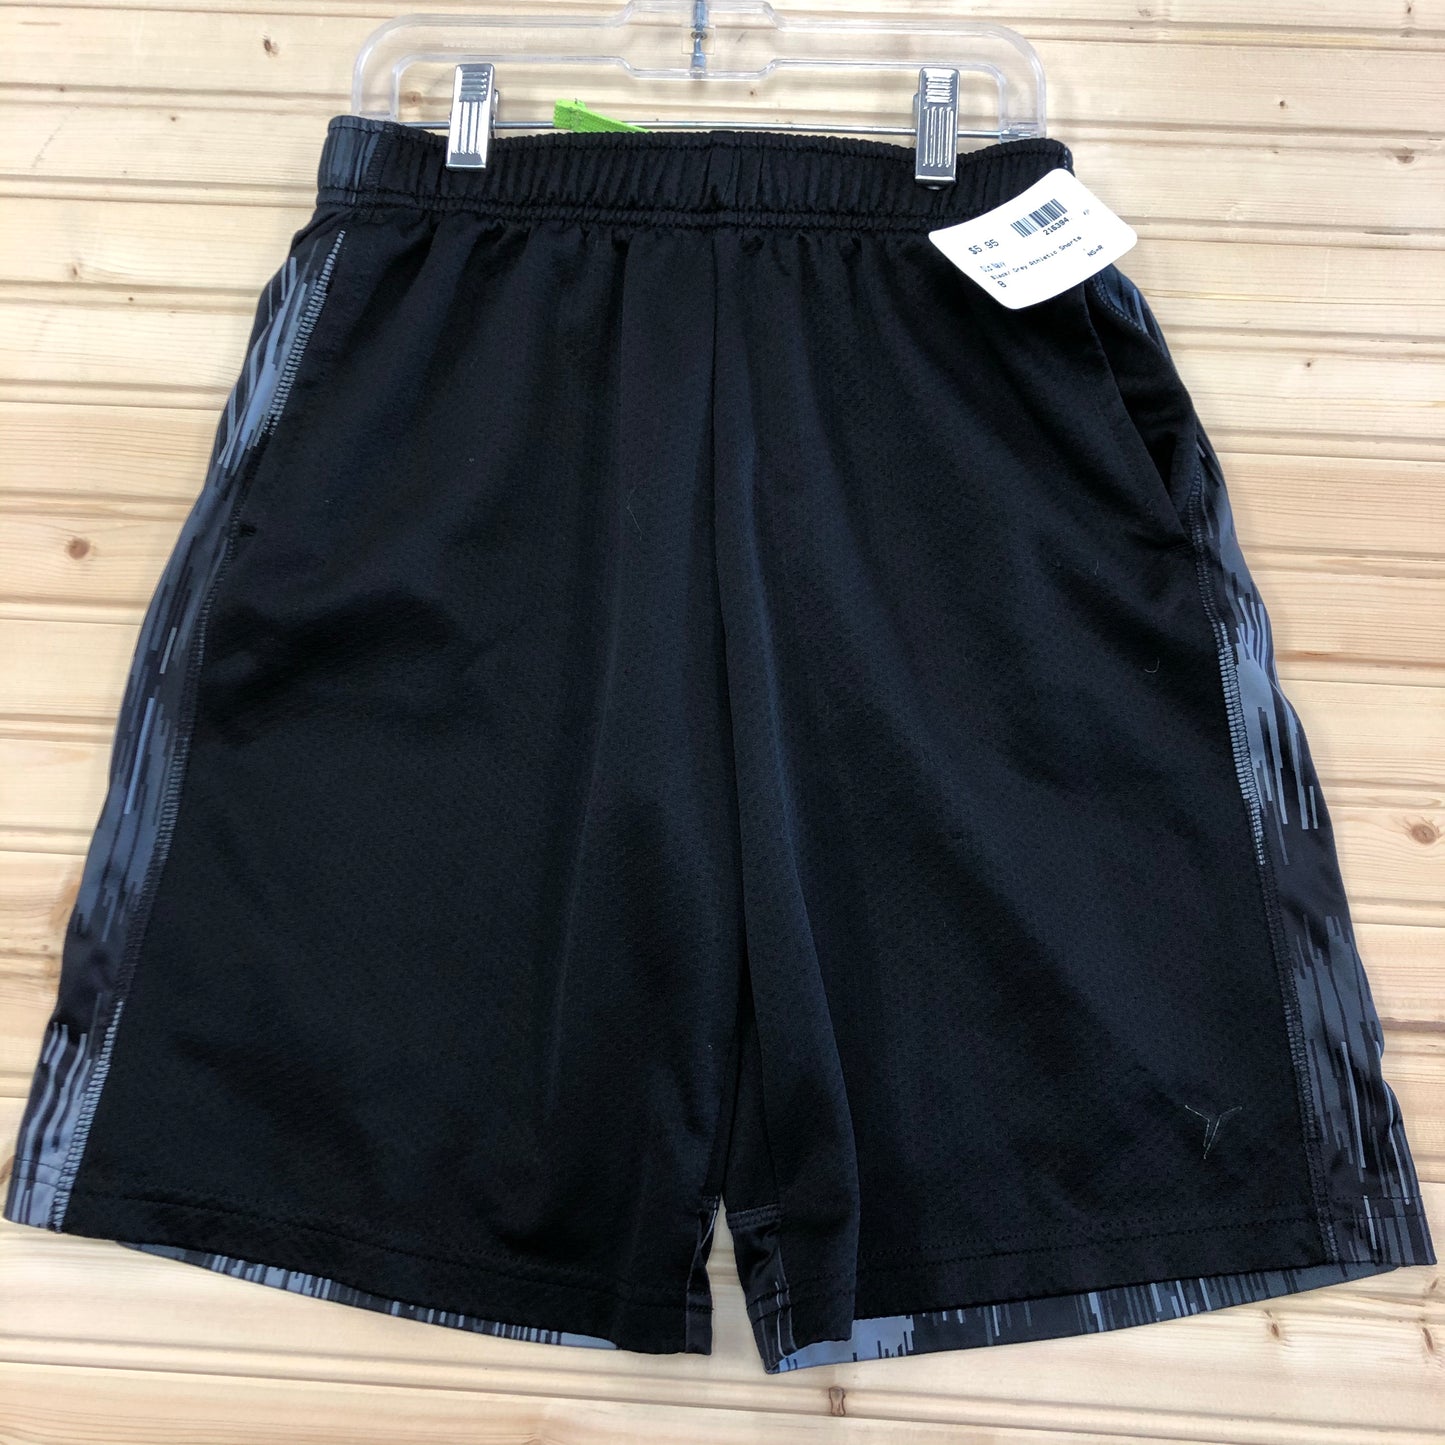 Black/ Grey Athletic Shorts